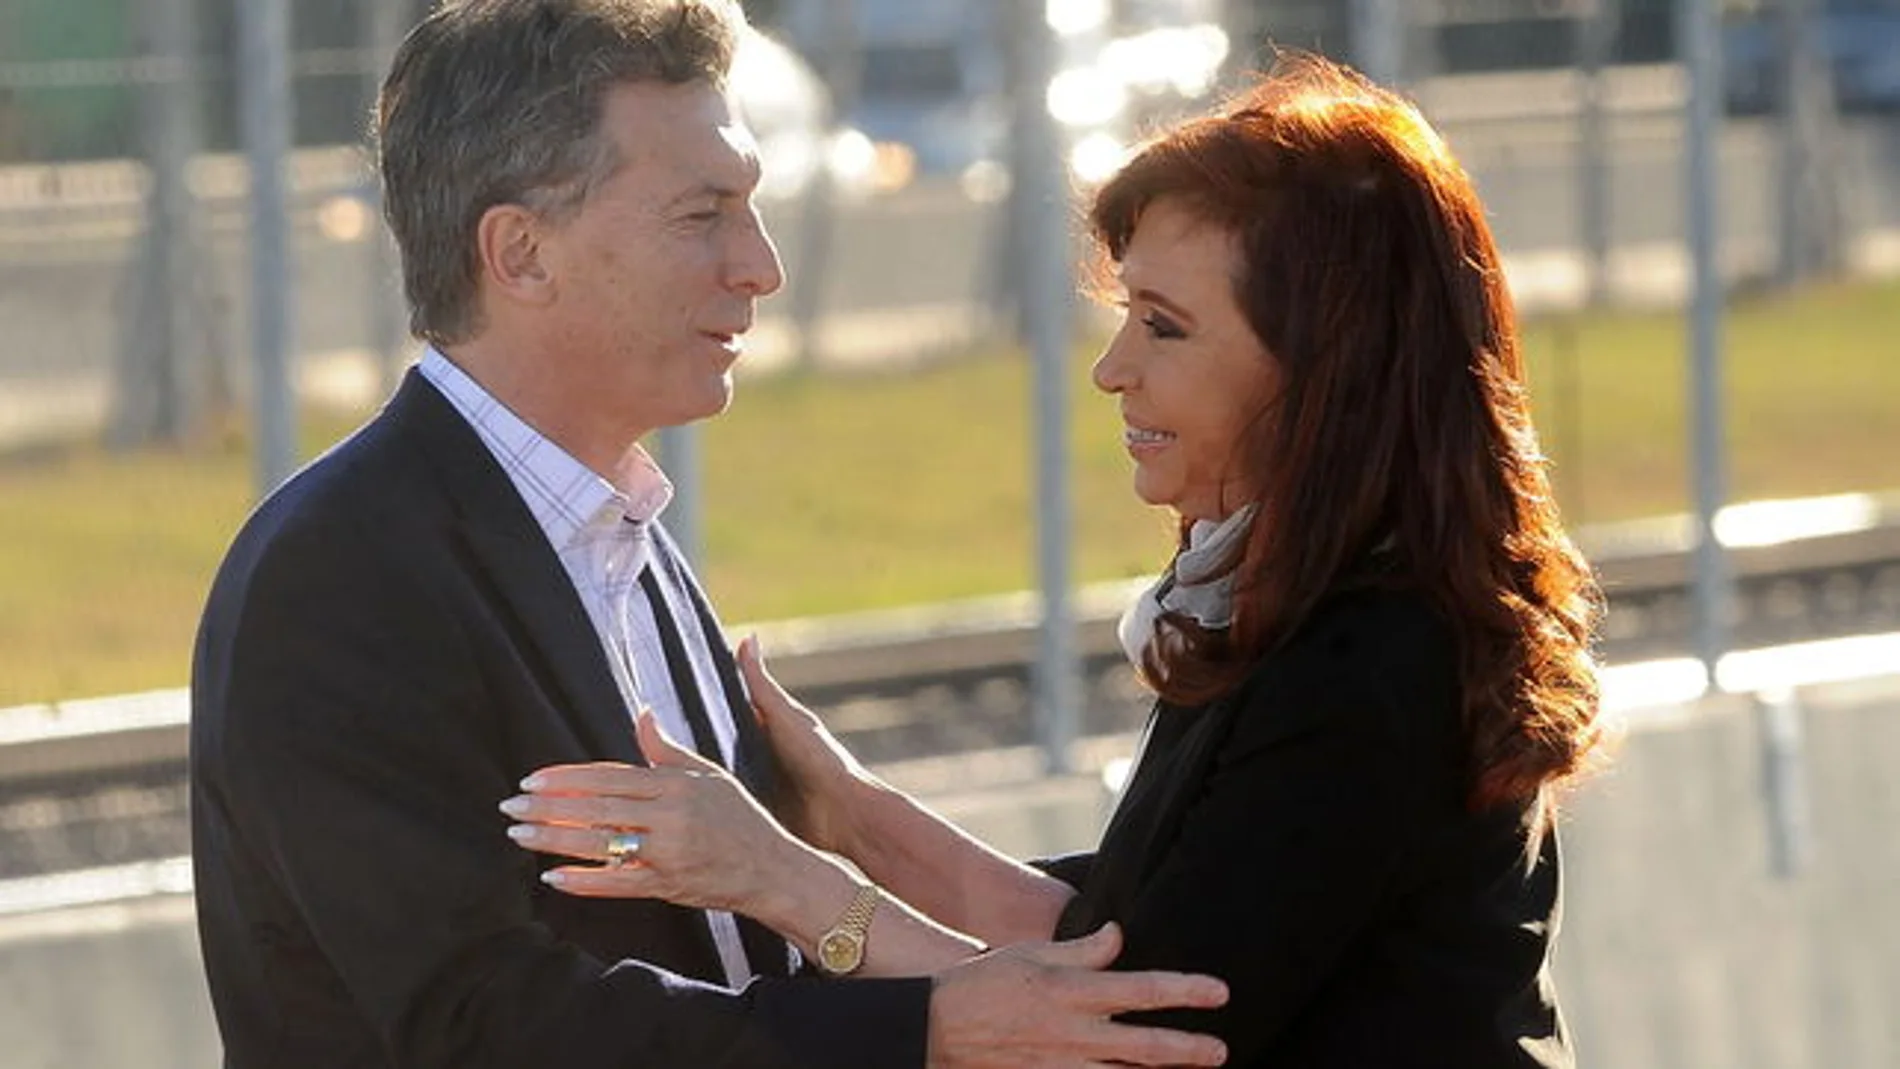 Mauricio Macri y Cristina Fernández de Kirchner / Efe